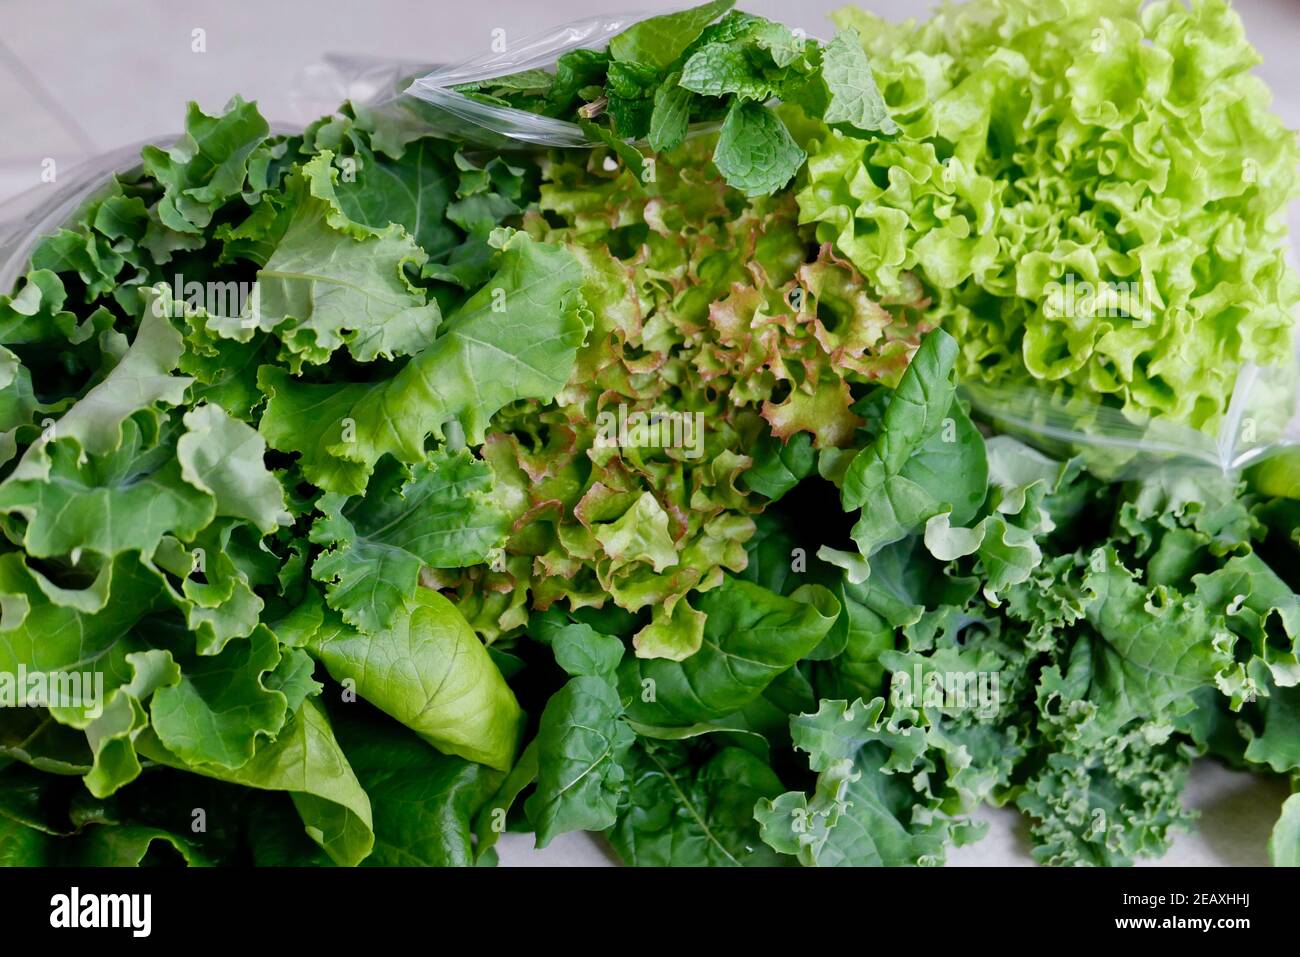 https://c8.alamy.com/comp/2EAXHHJ/fresh-hydroponic-mixed-greens-lettuce-kale-lollo-arugula-2EAXHHJ.jpg